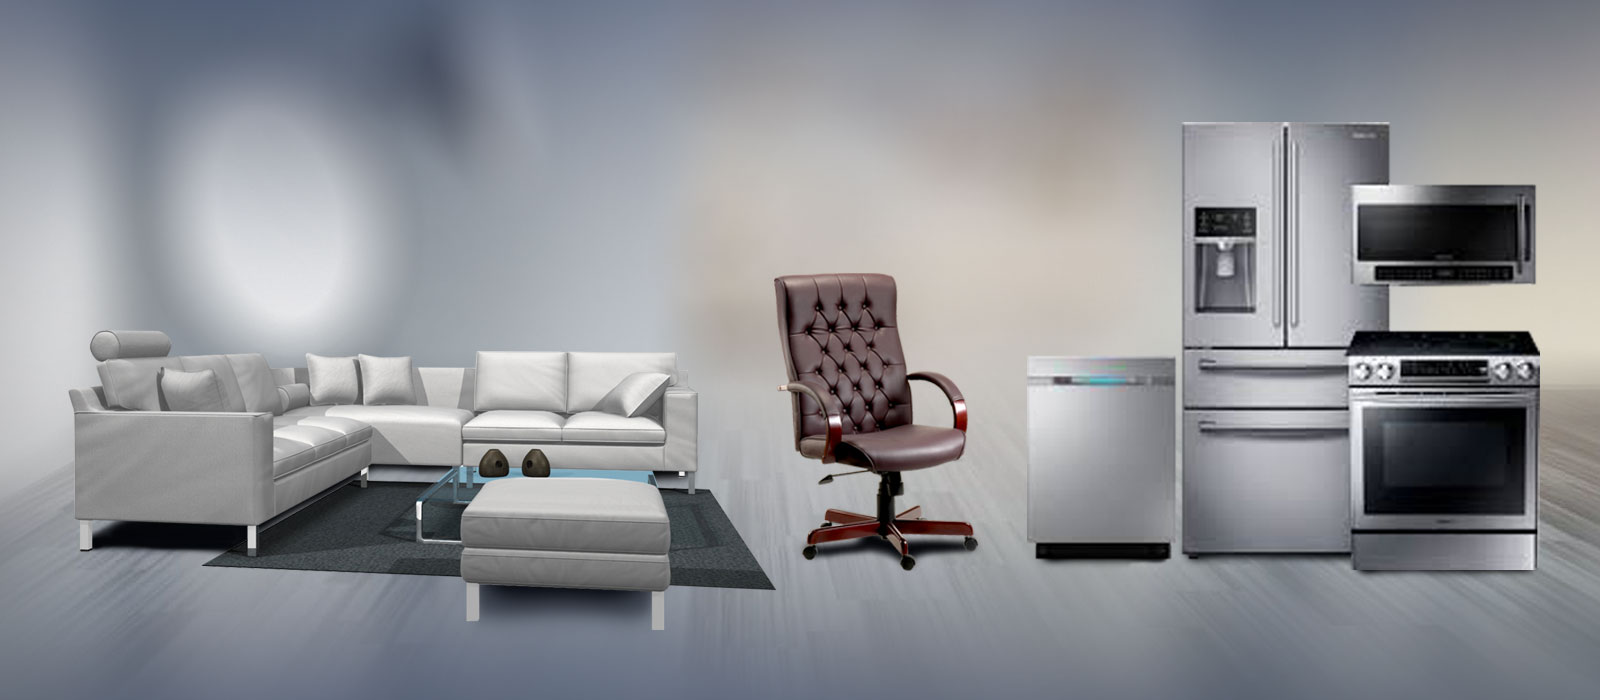 Furniture & Appliances